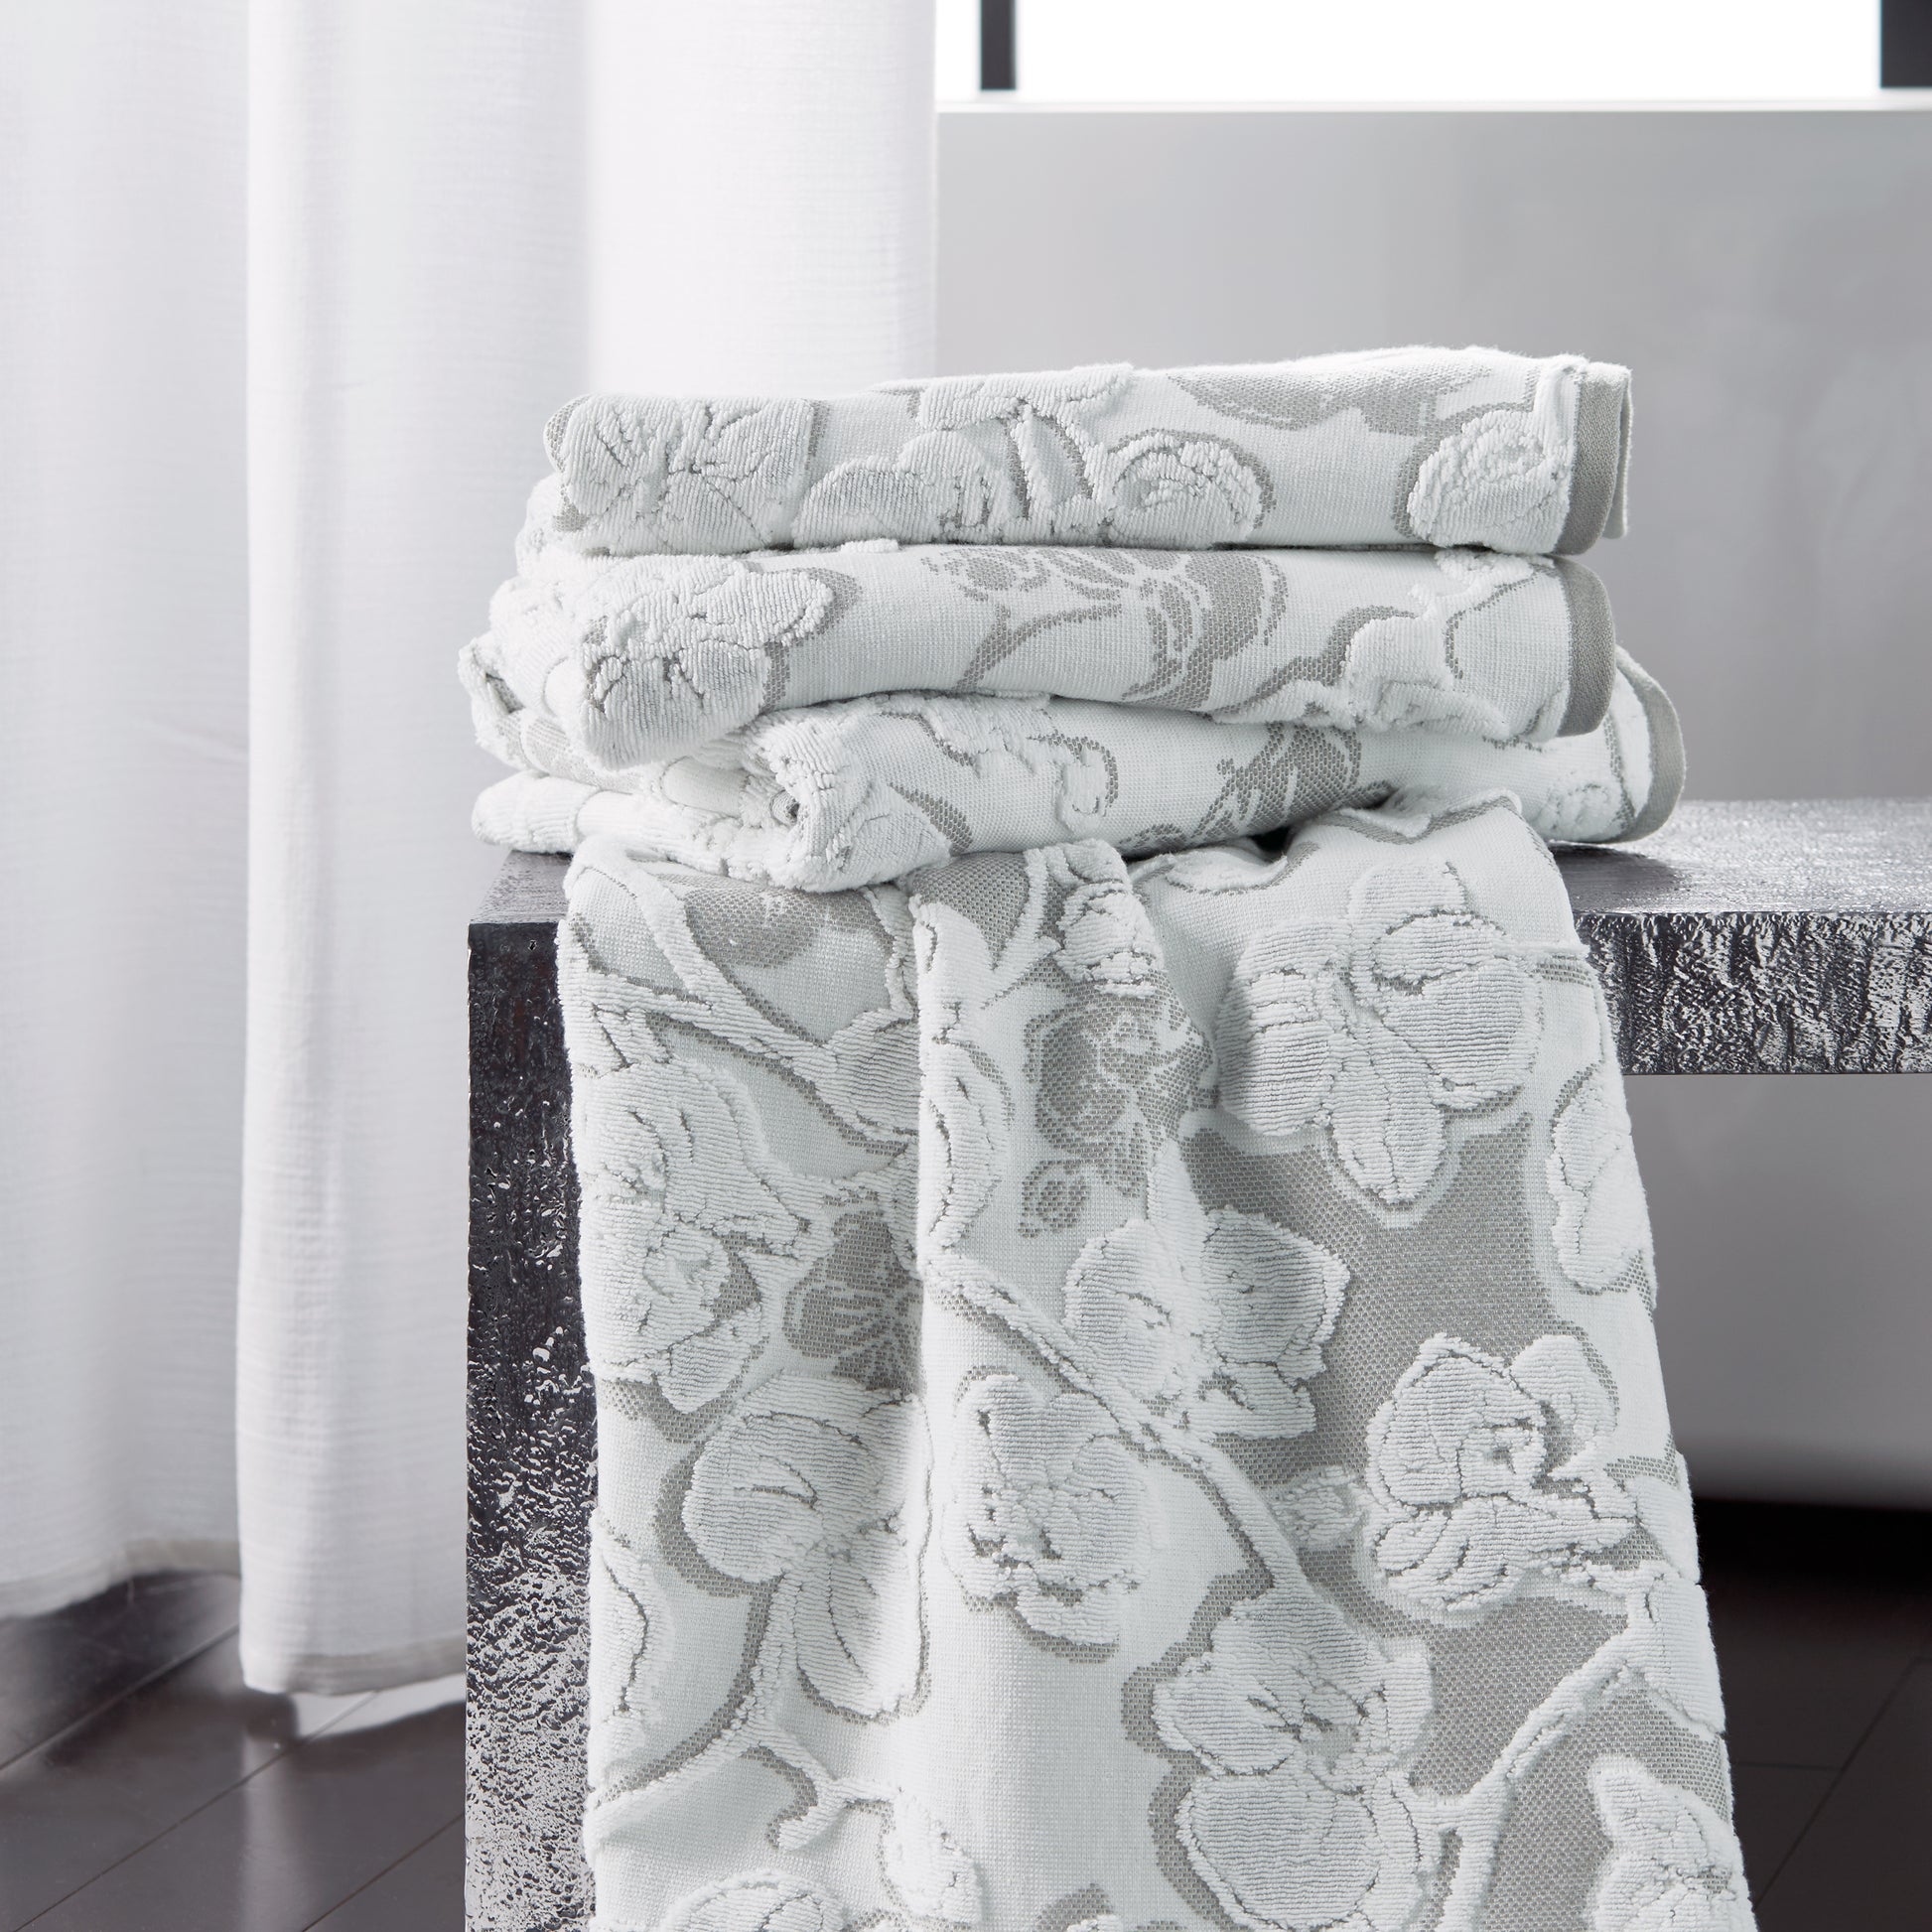 Michael Aram Orchid Towels